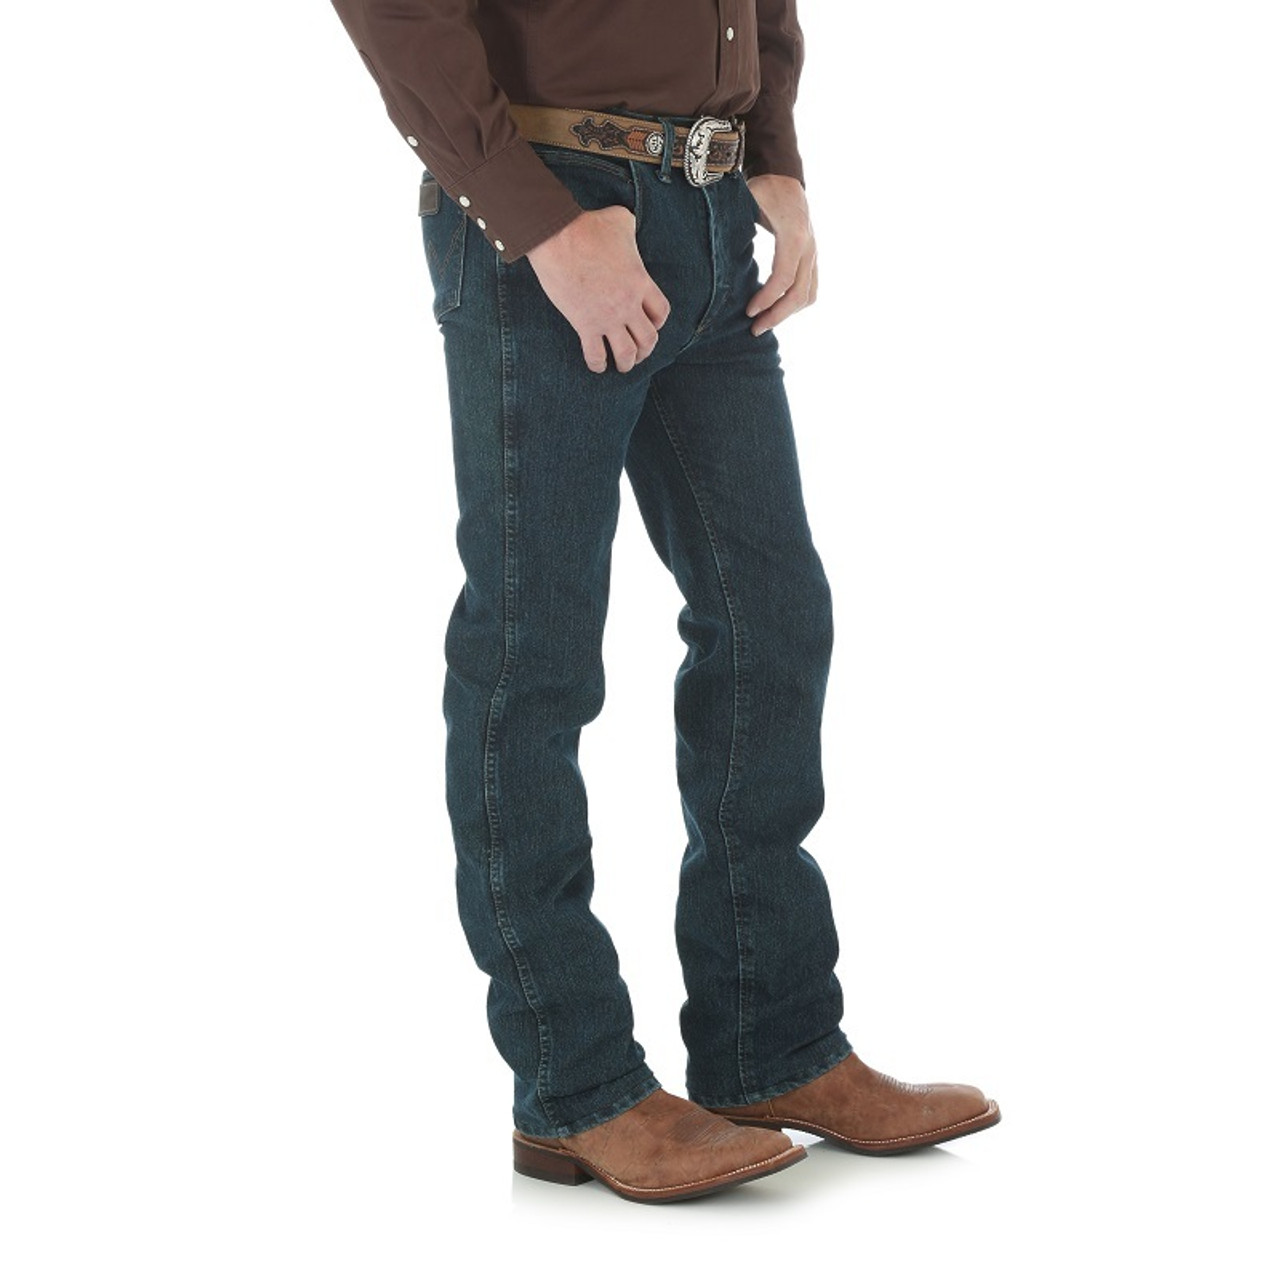 Wrangler Men's Premium Performance Advanced Comfort Slim Fit Jeans